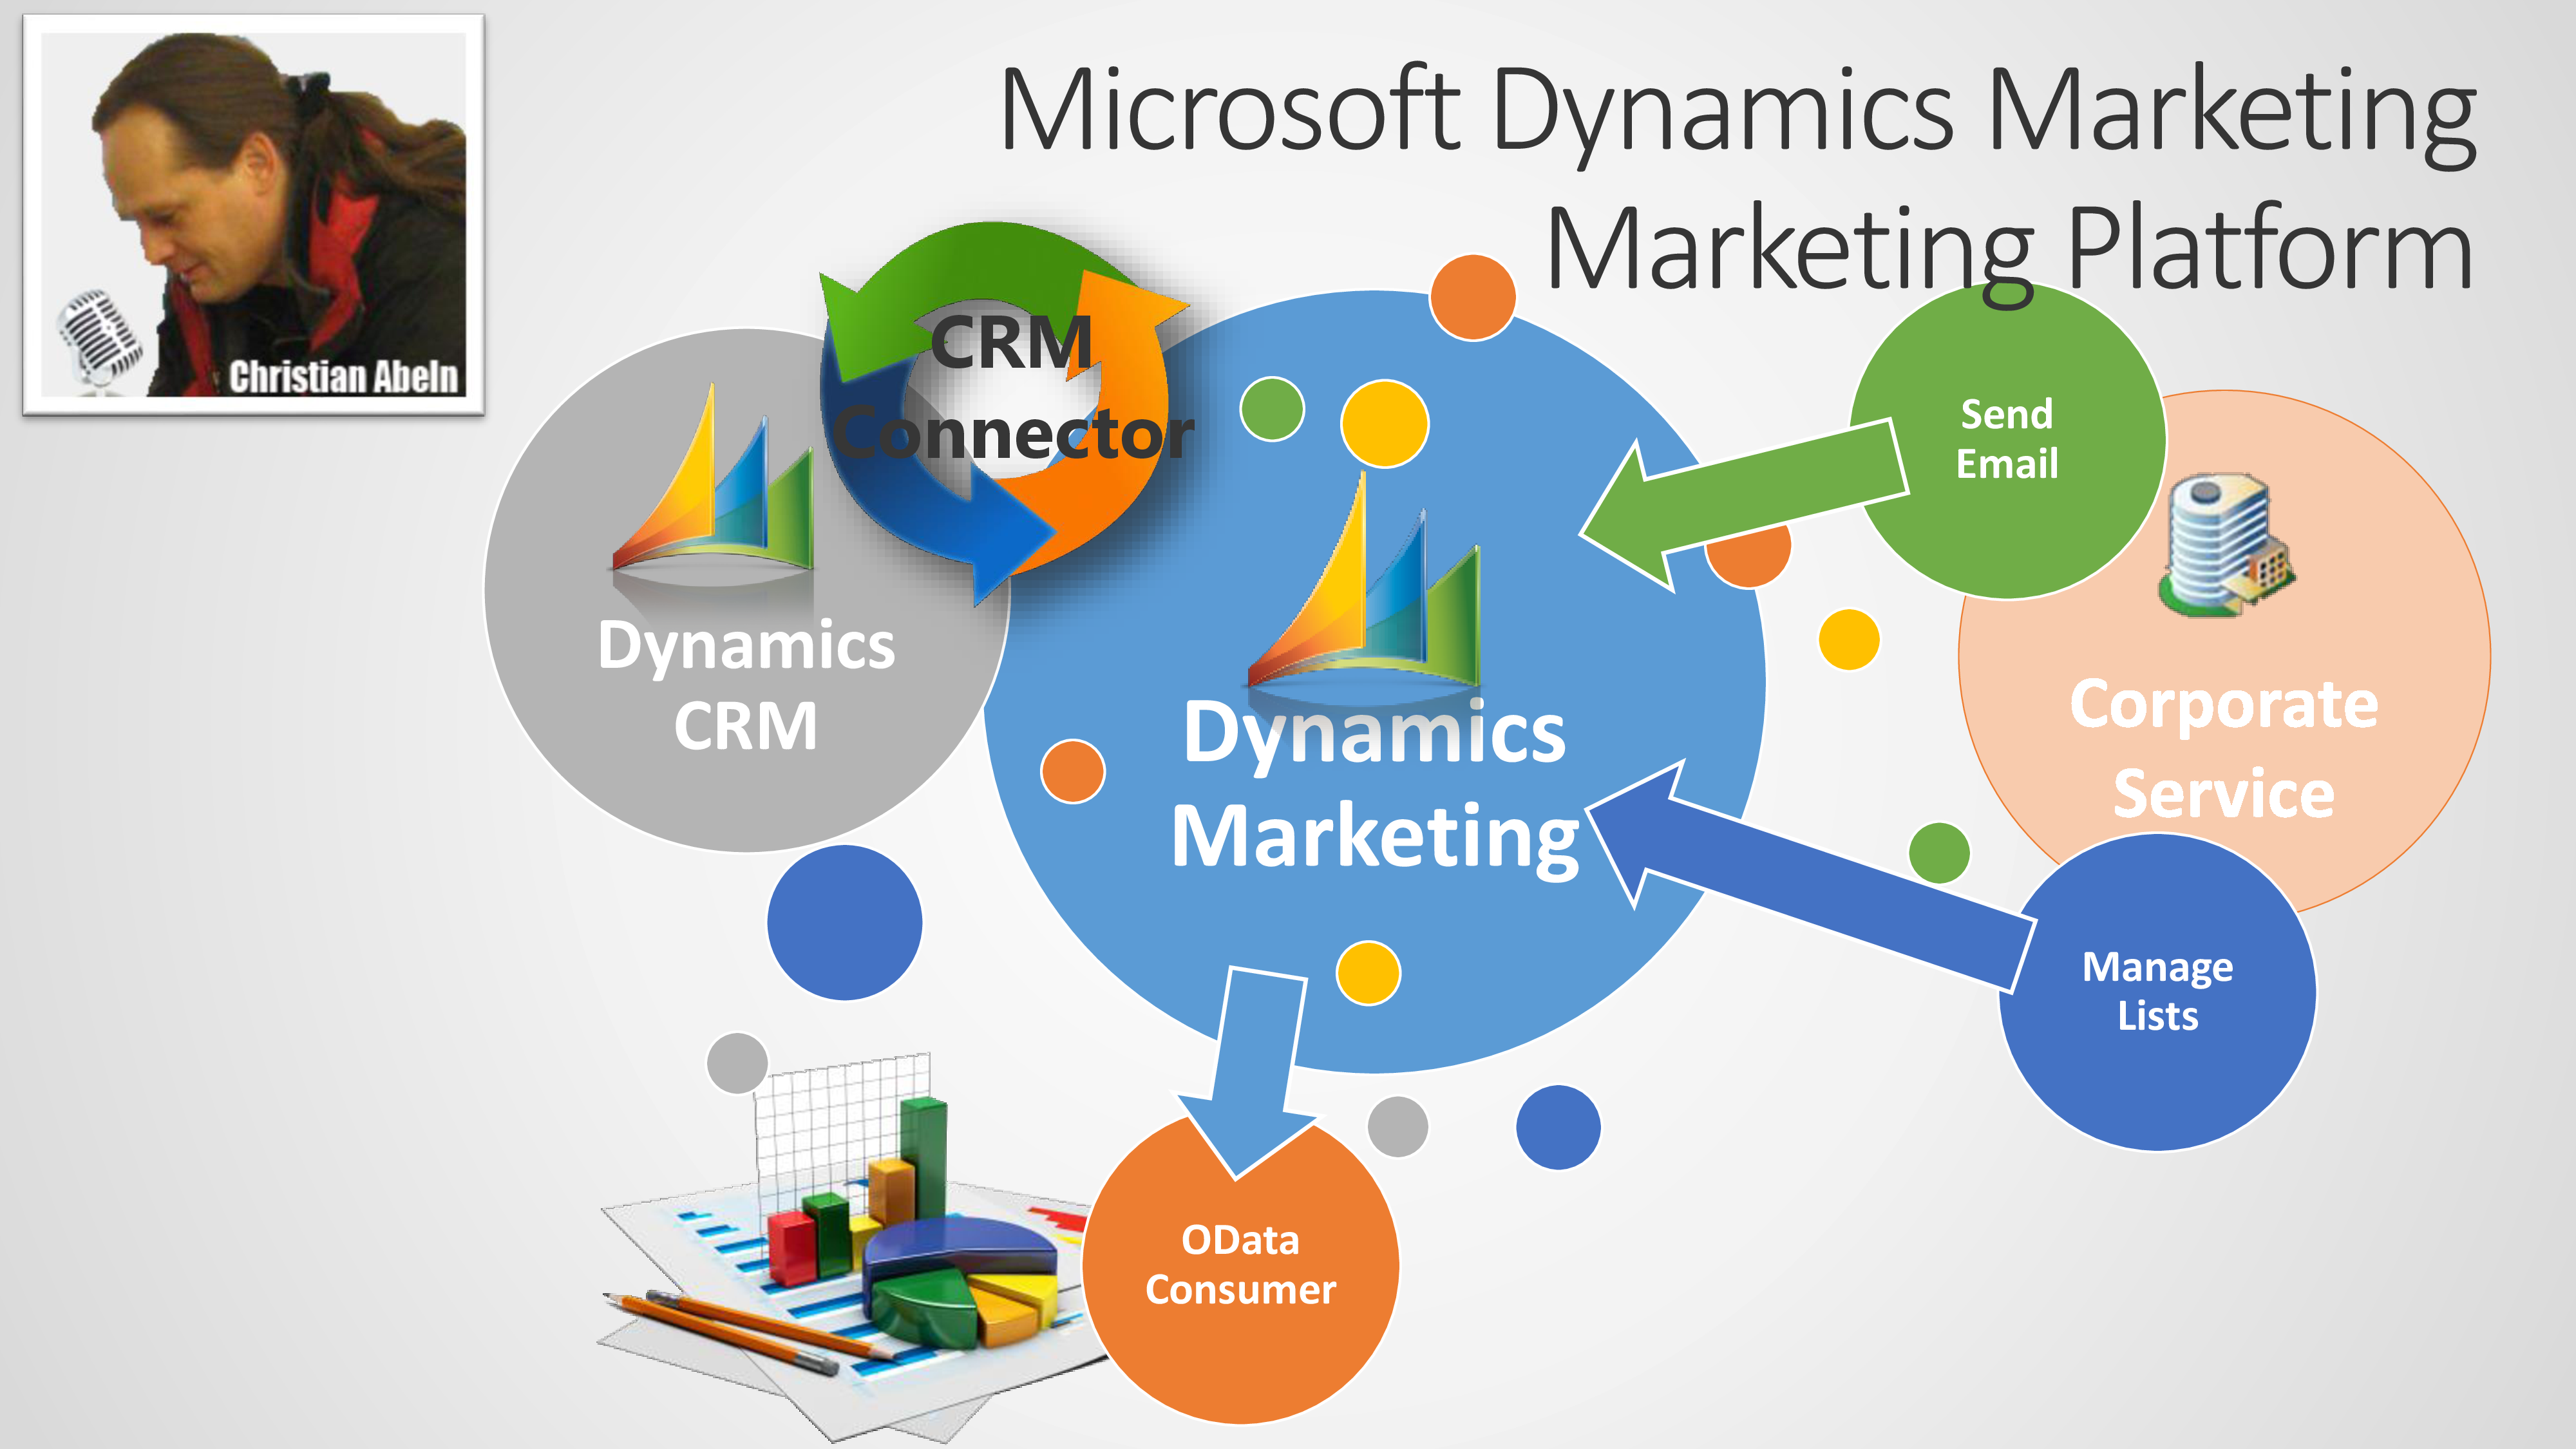 Platform Aspects of Dynamics Marketing